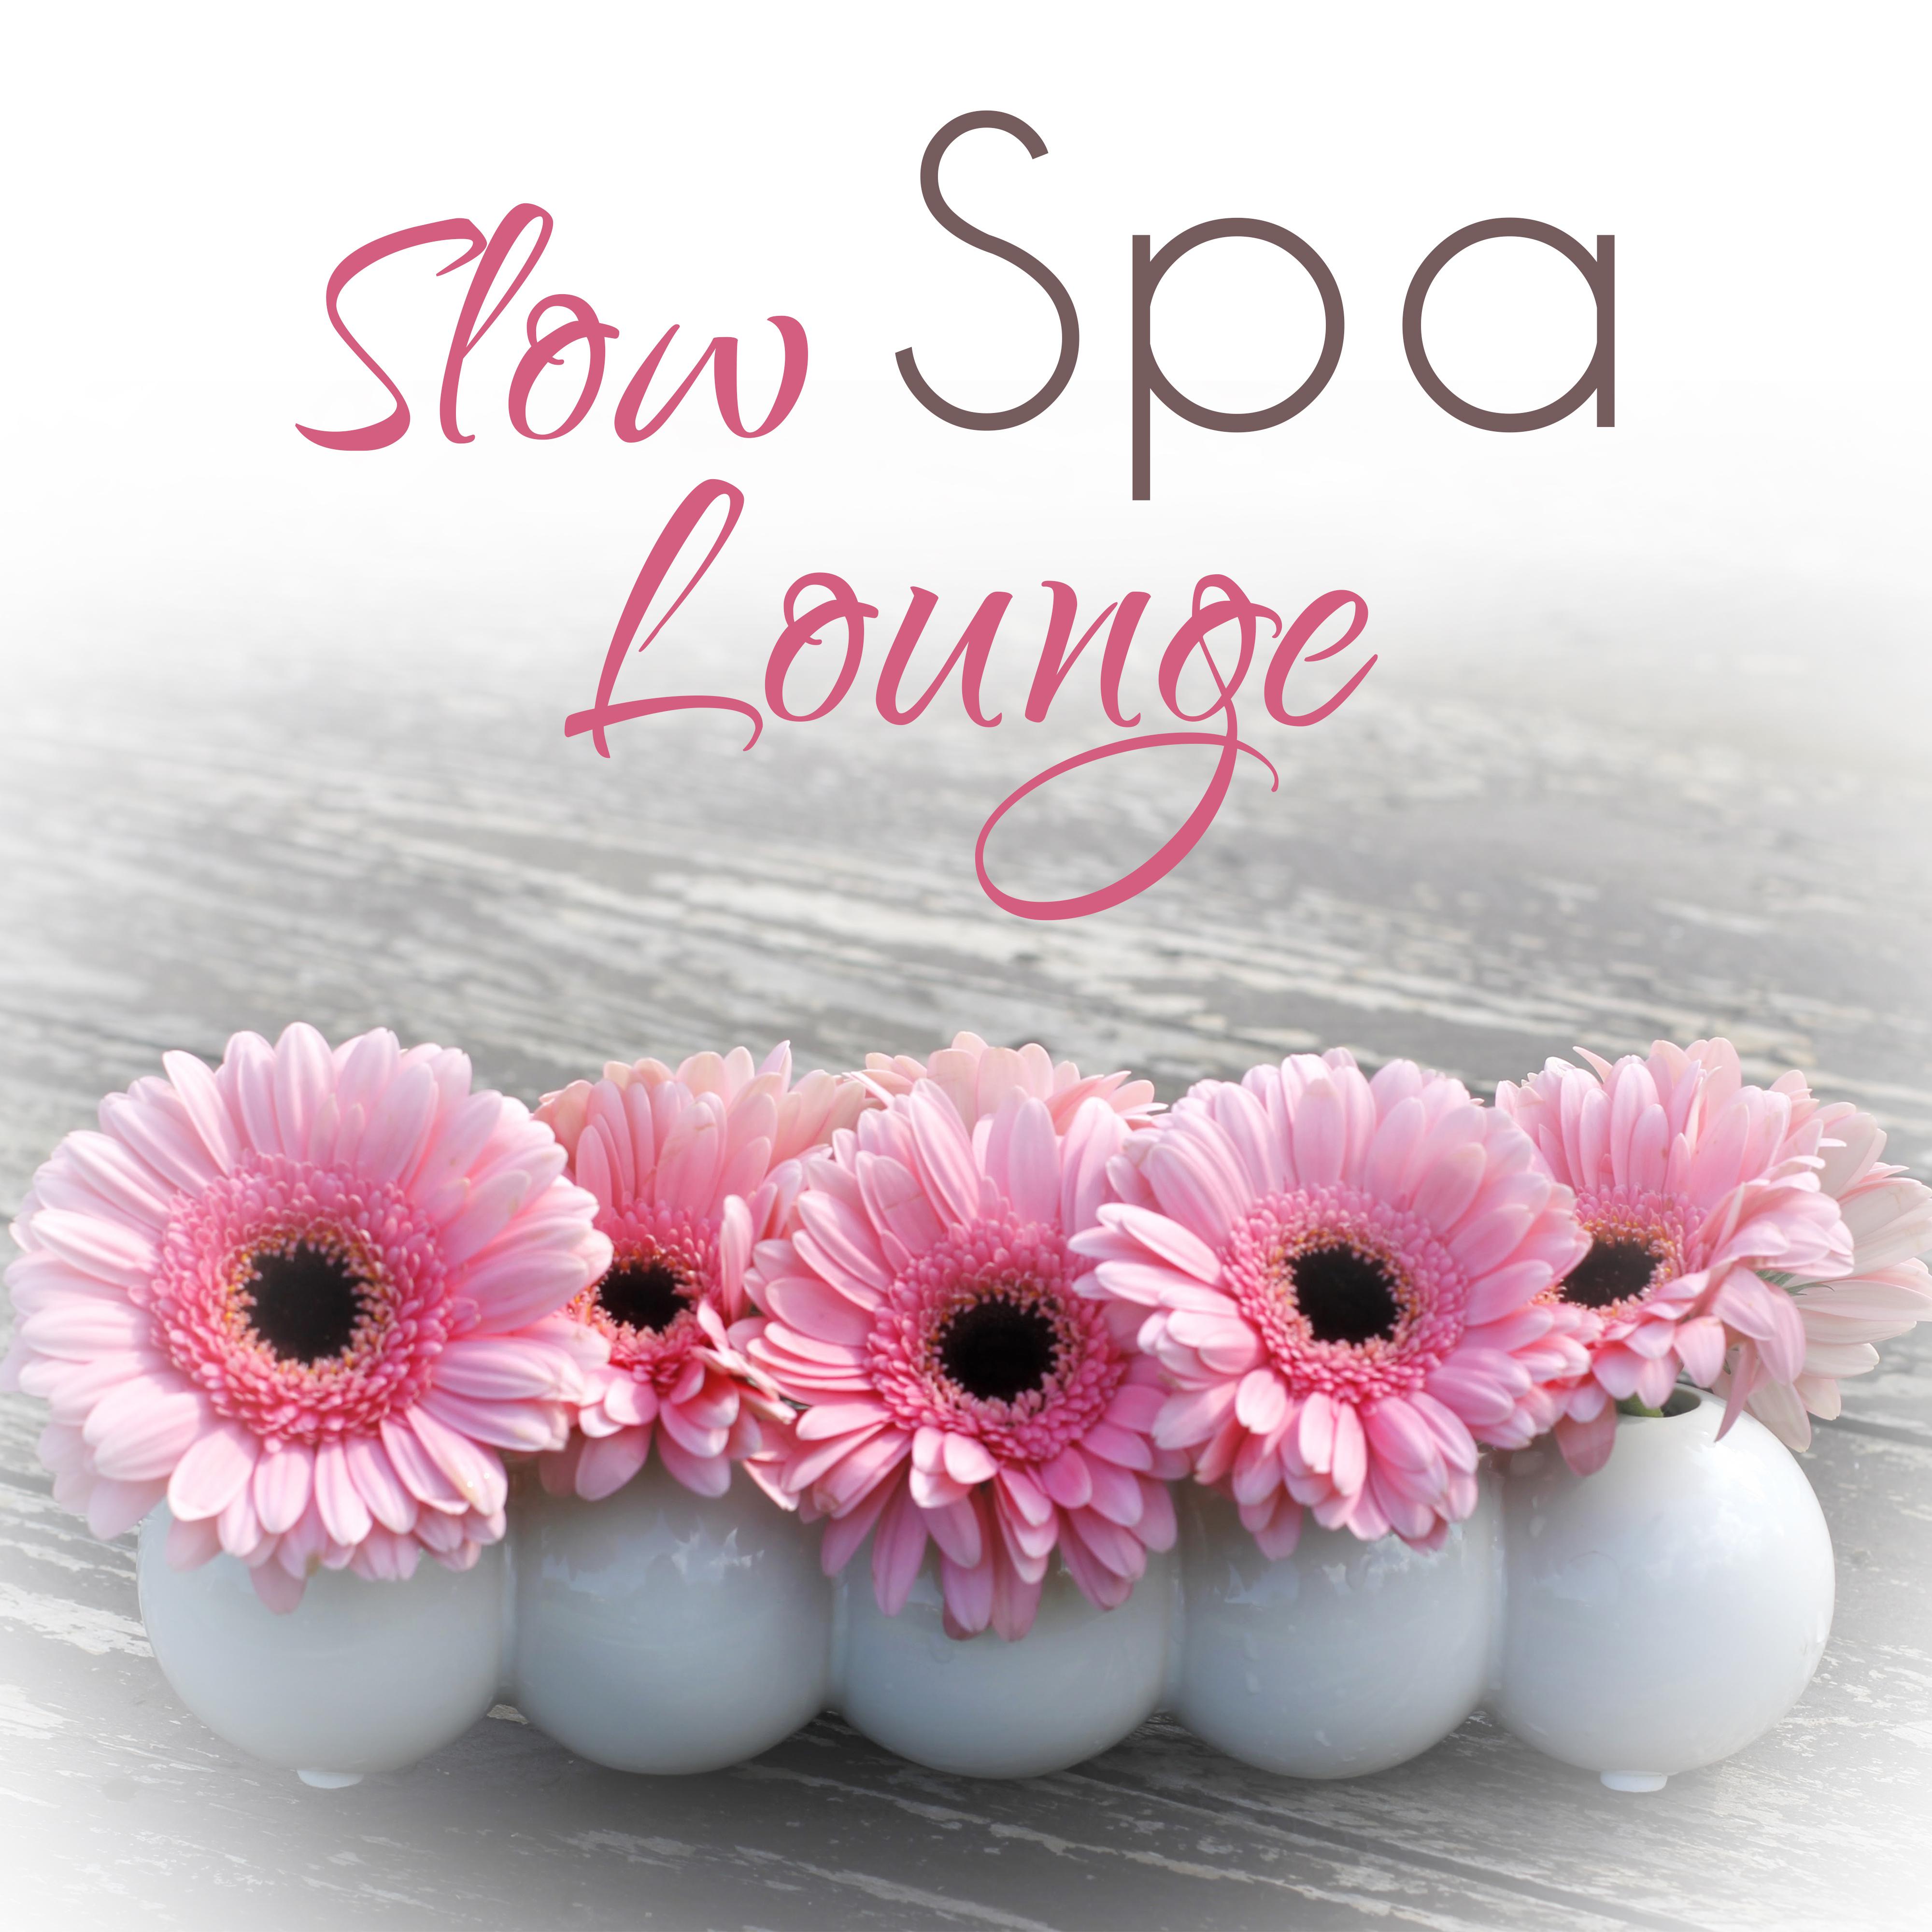 Slow Spa Lounge